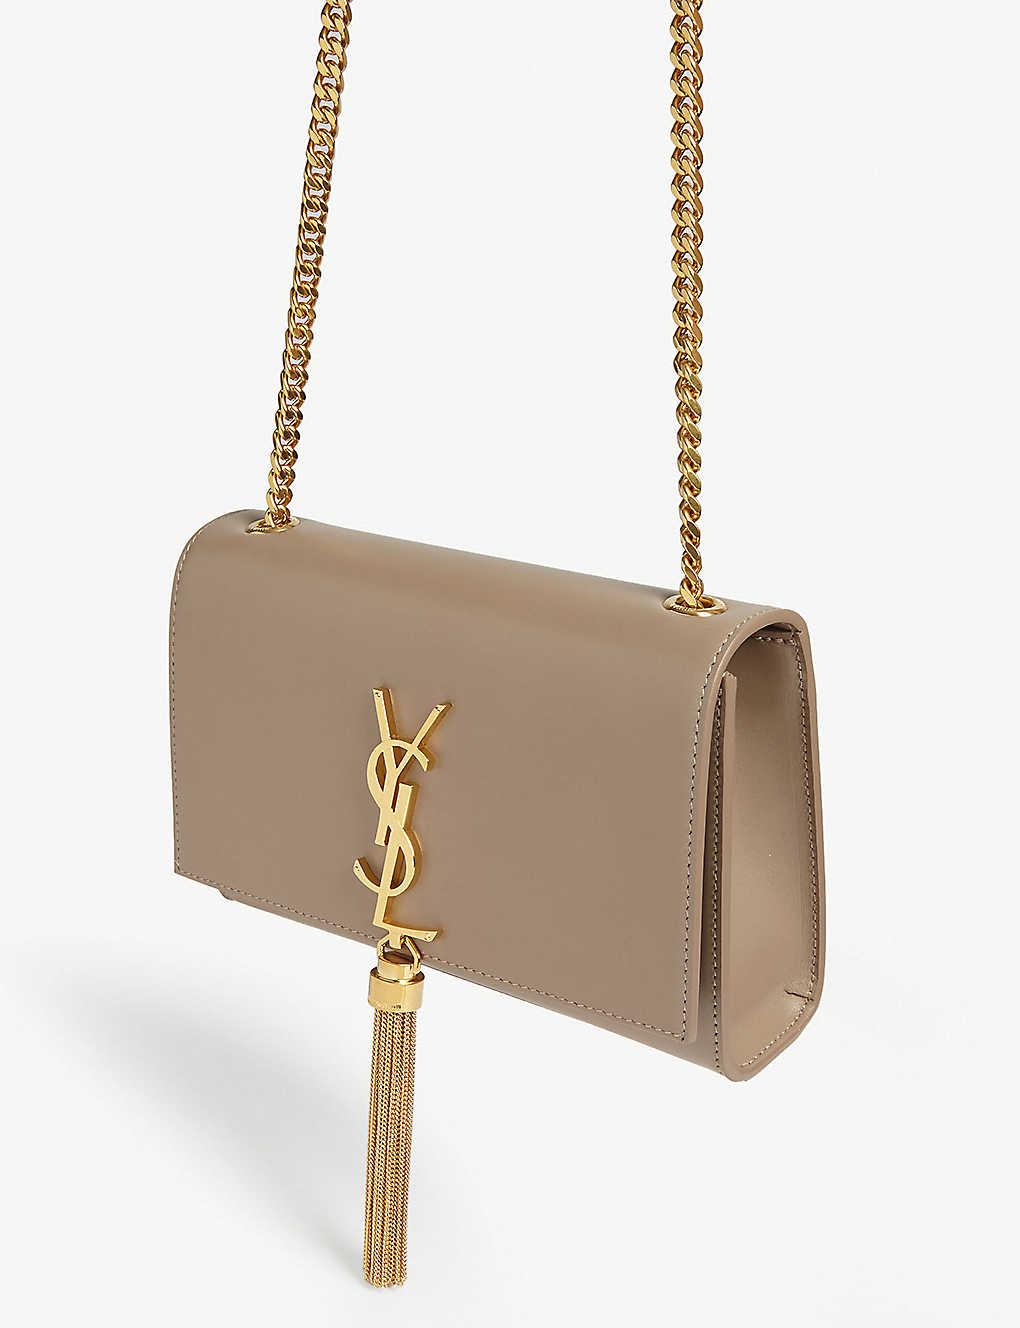 Ysl Saint Laurent slp Kate chain shoulder bag with tassels beige